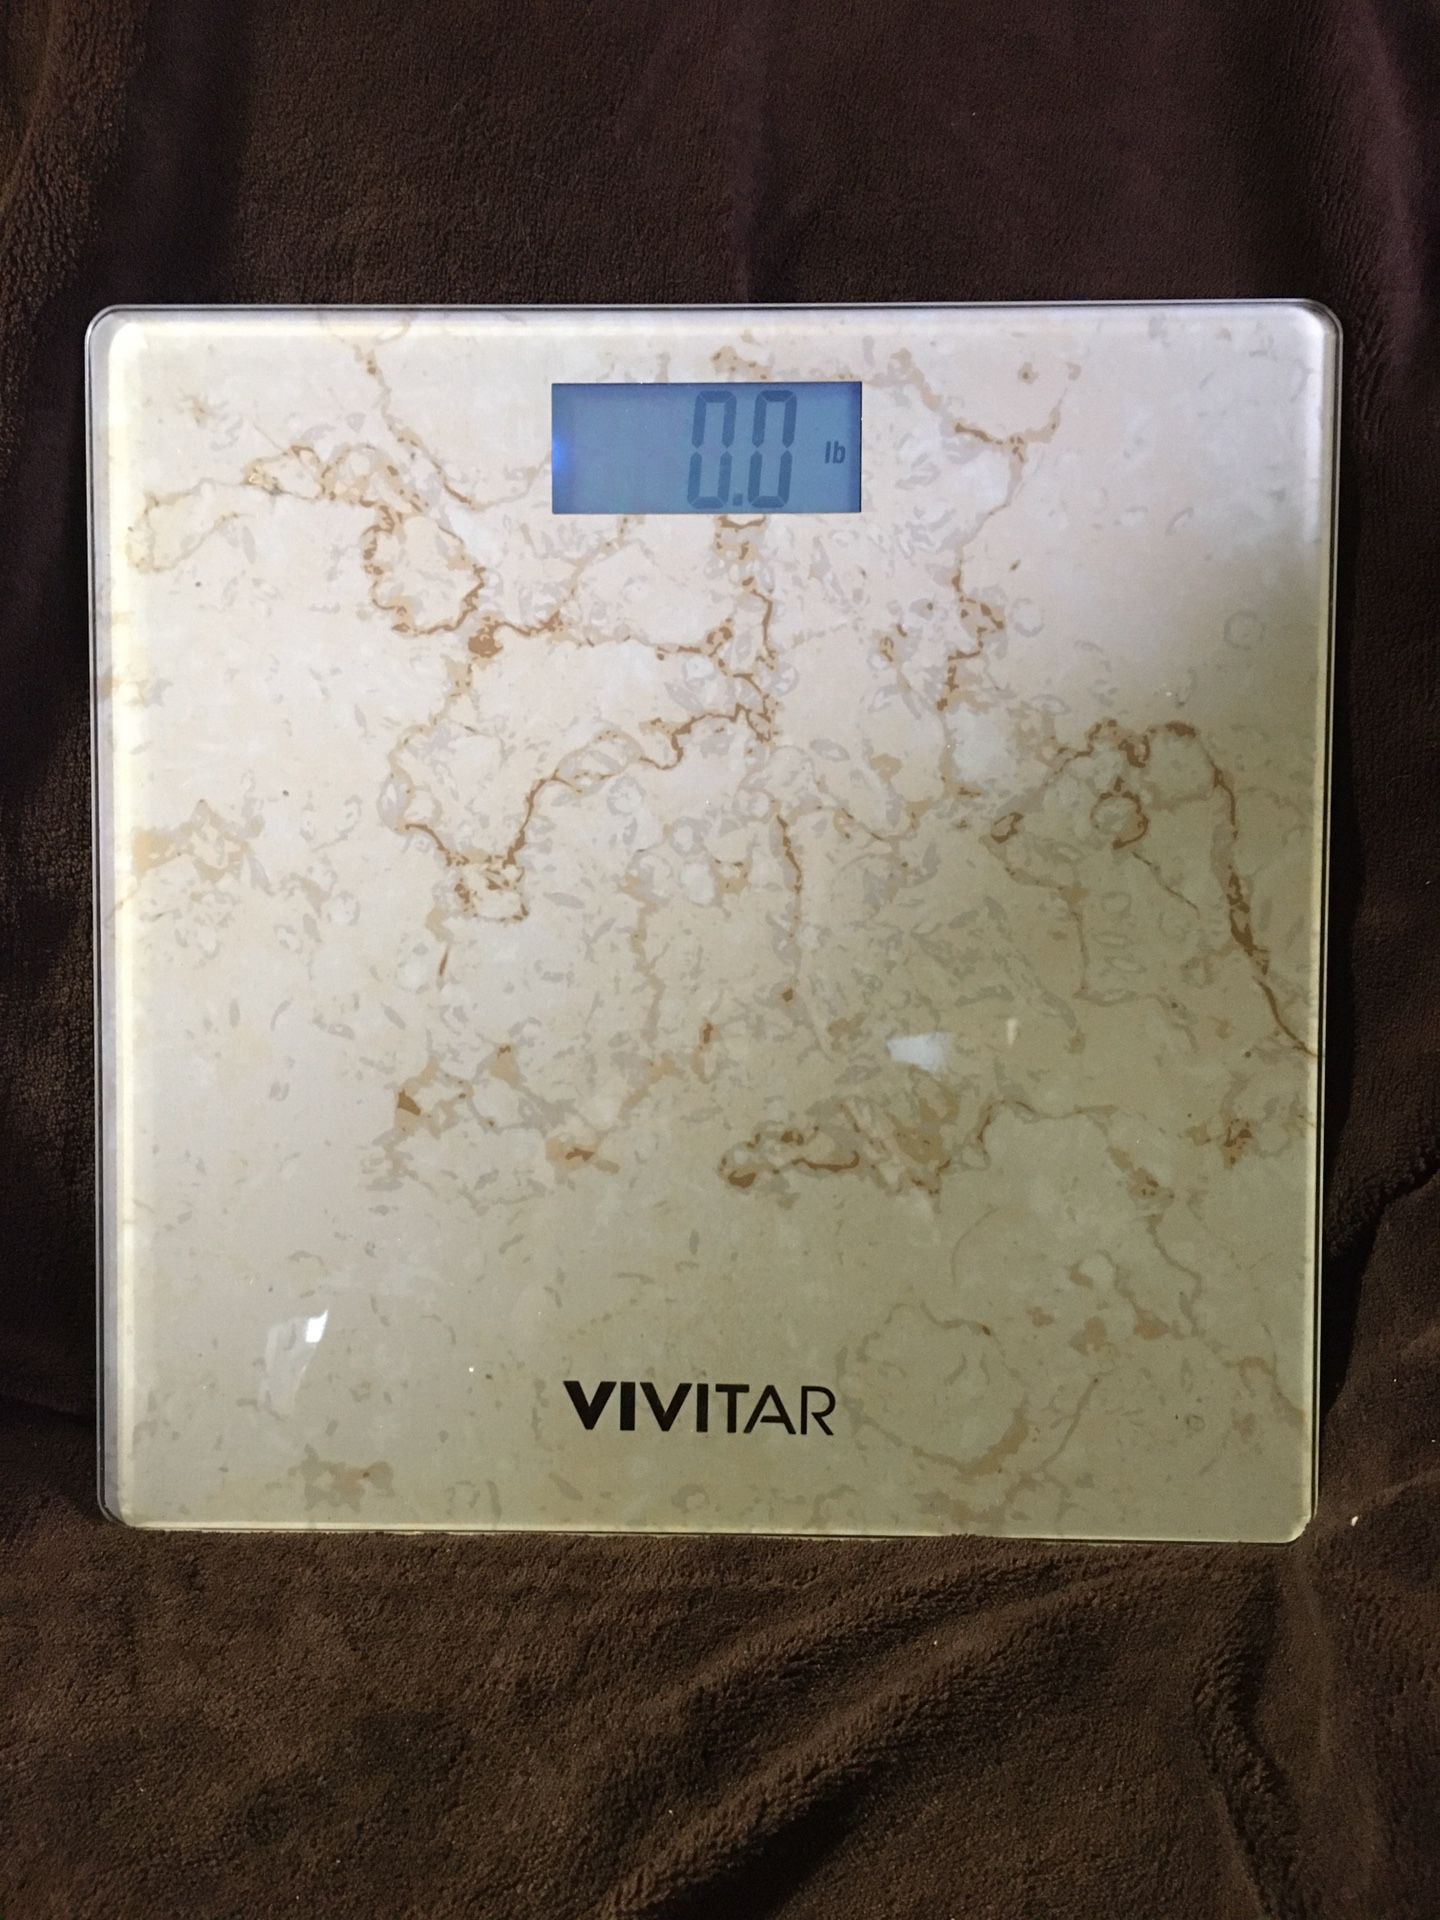 Vivitar bathroom scale for sale